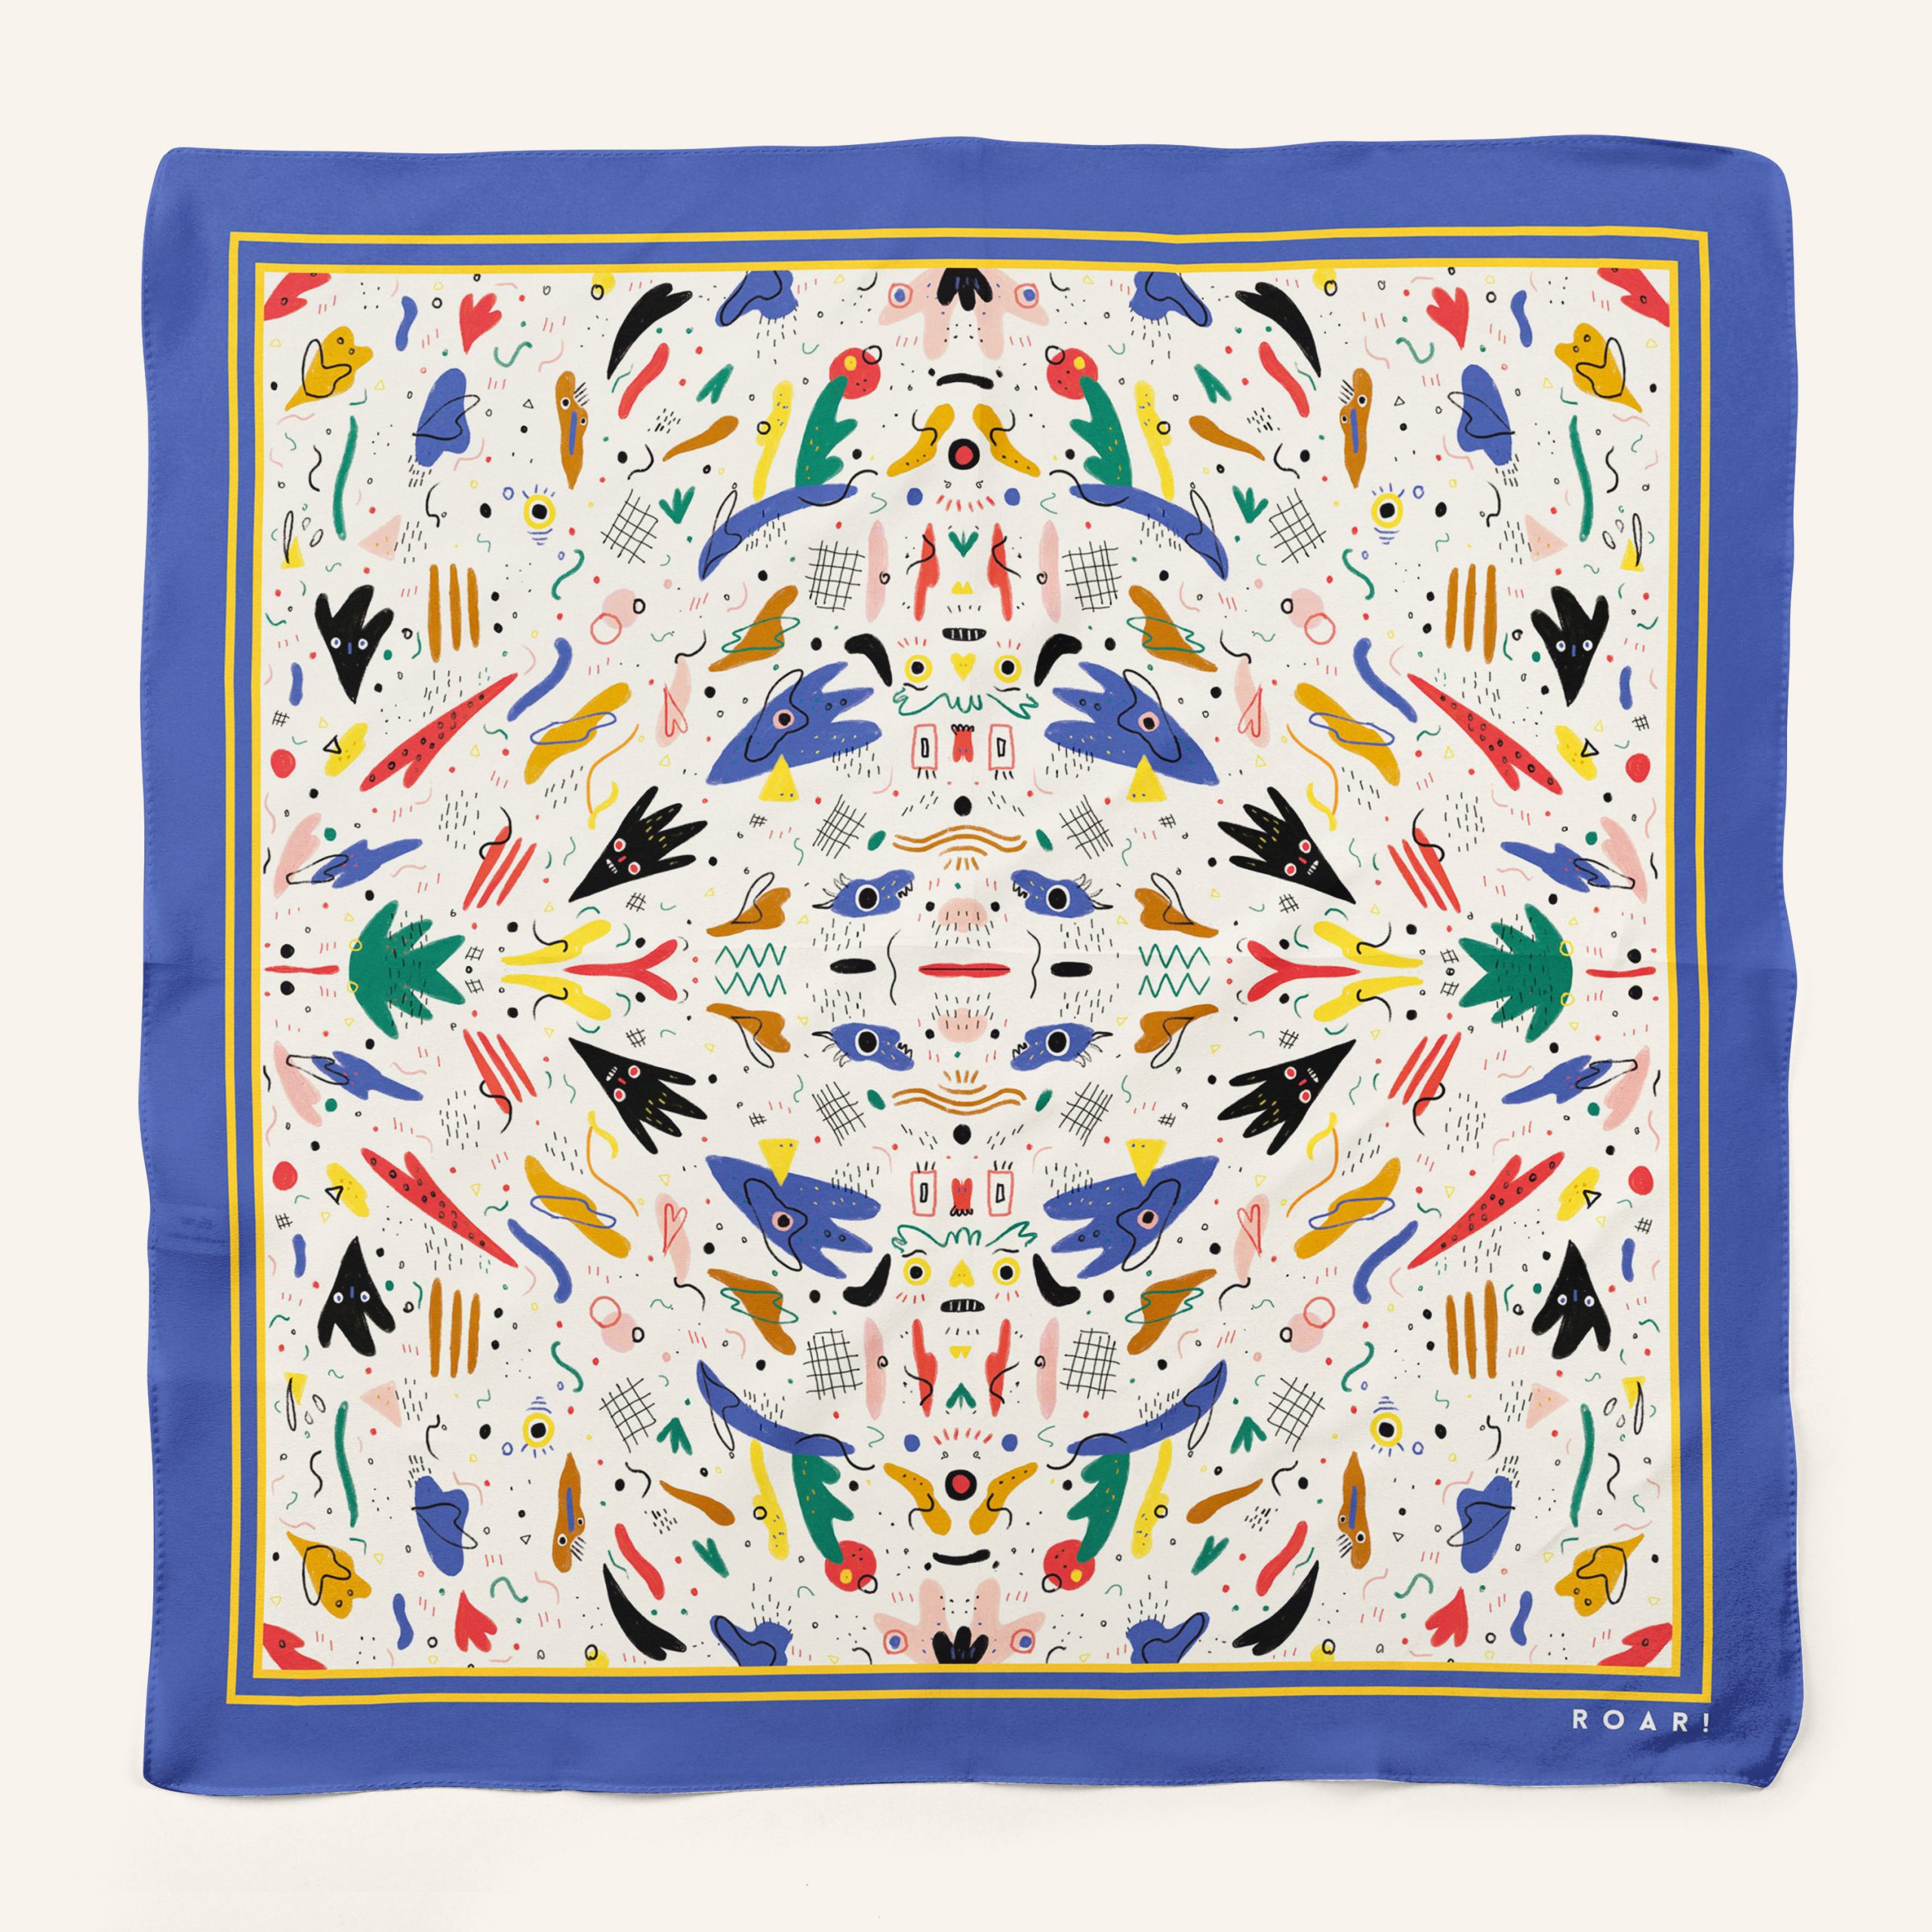 Catalina Vásquez Patterns textiles